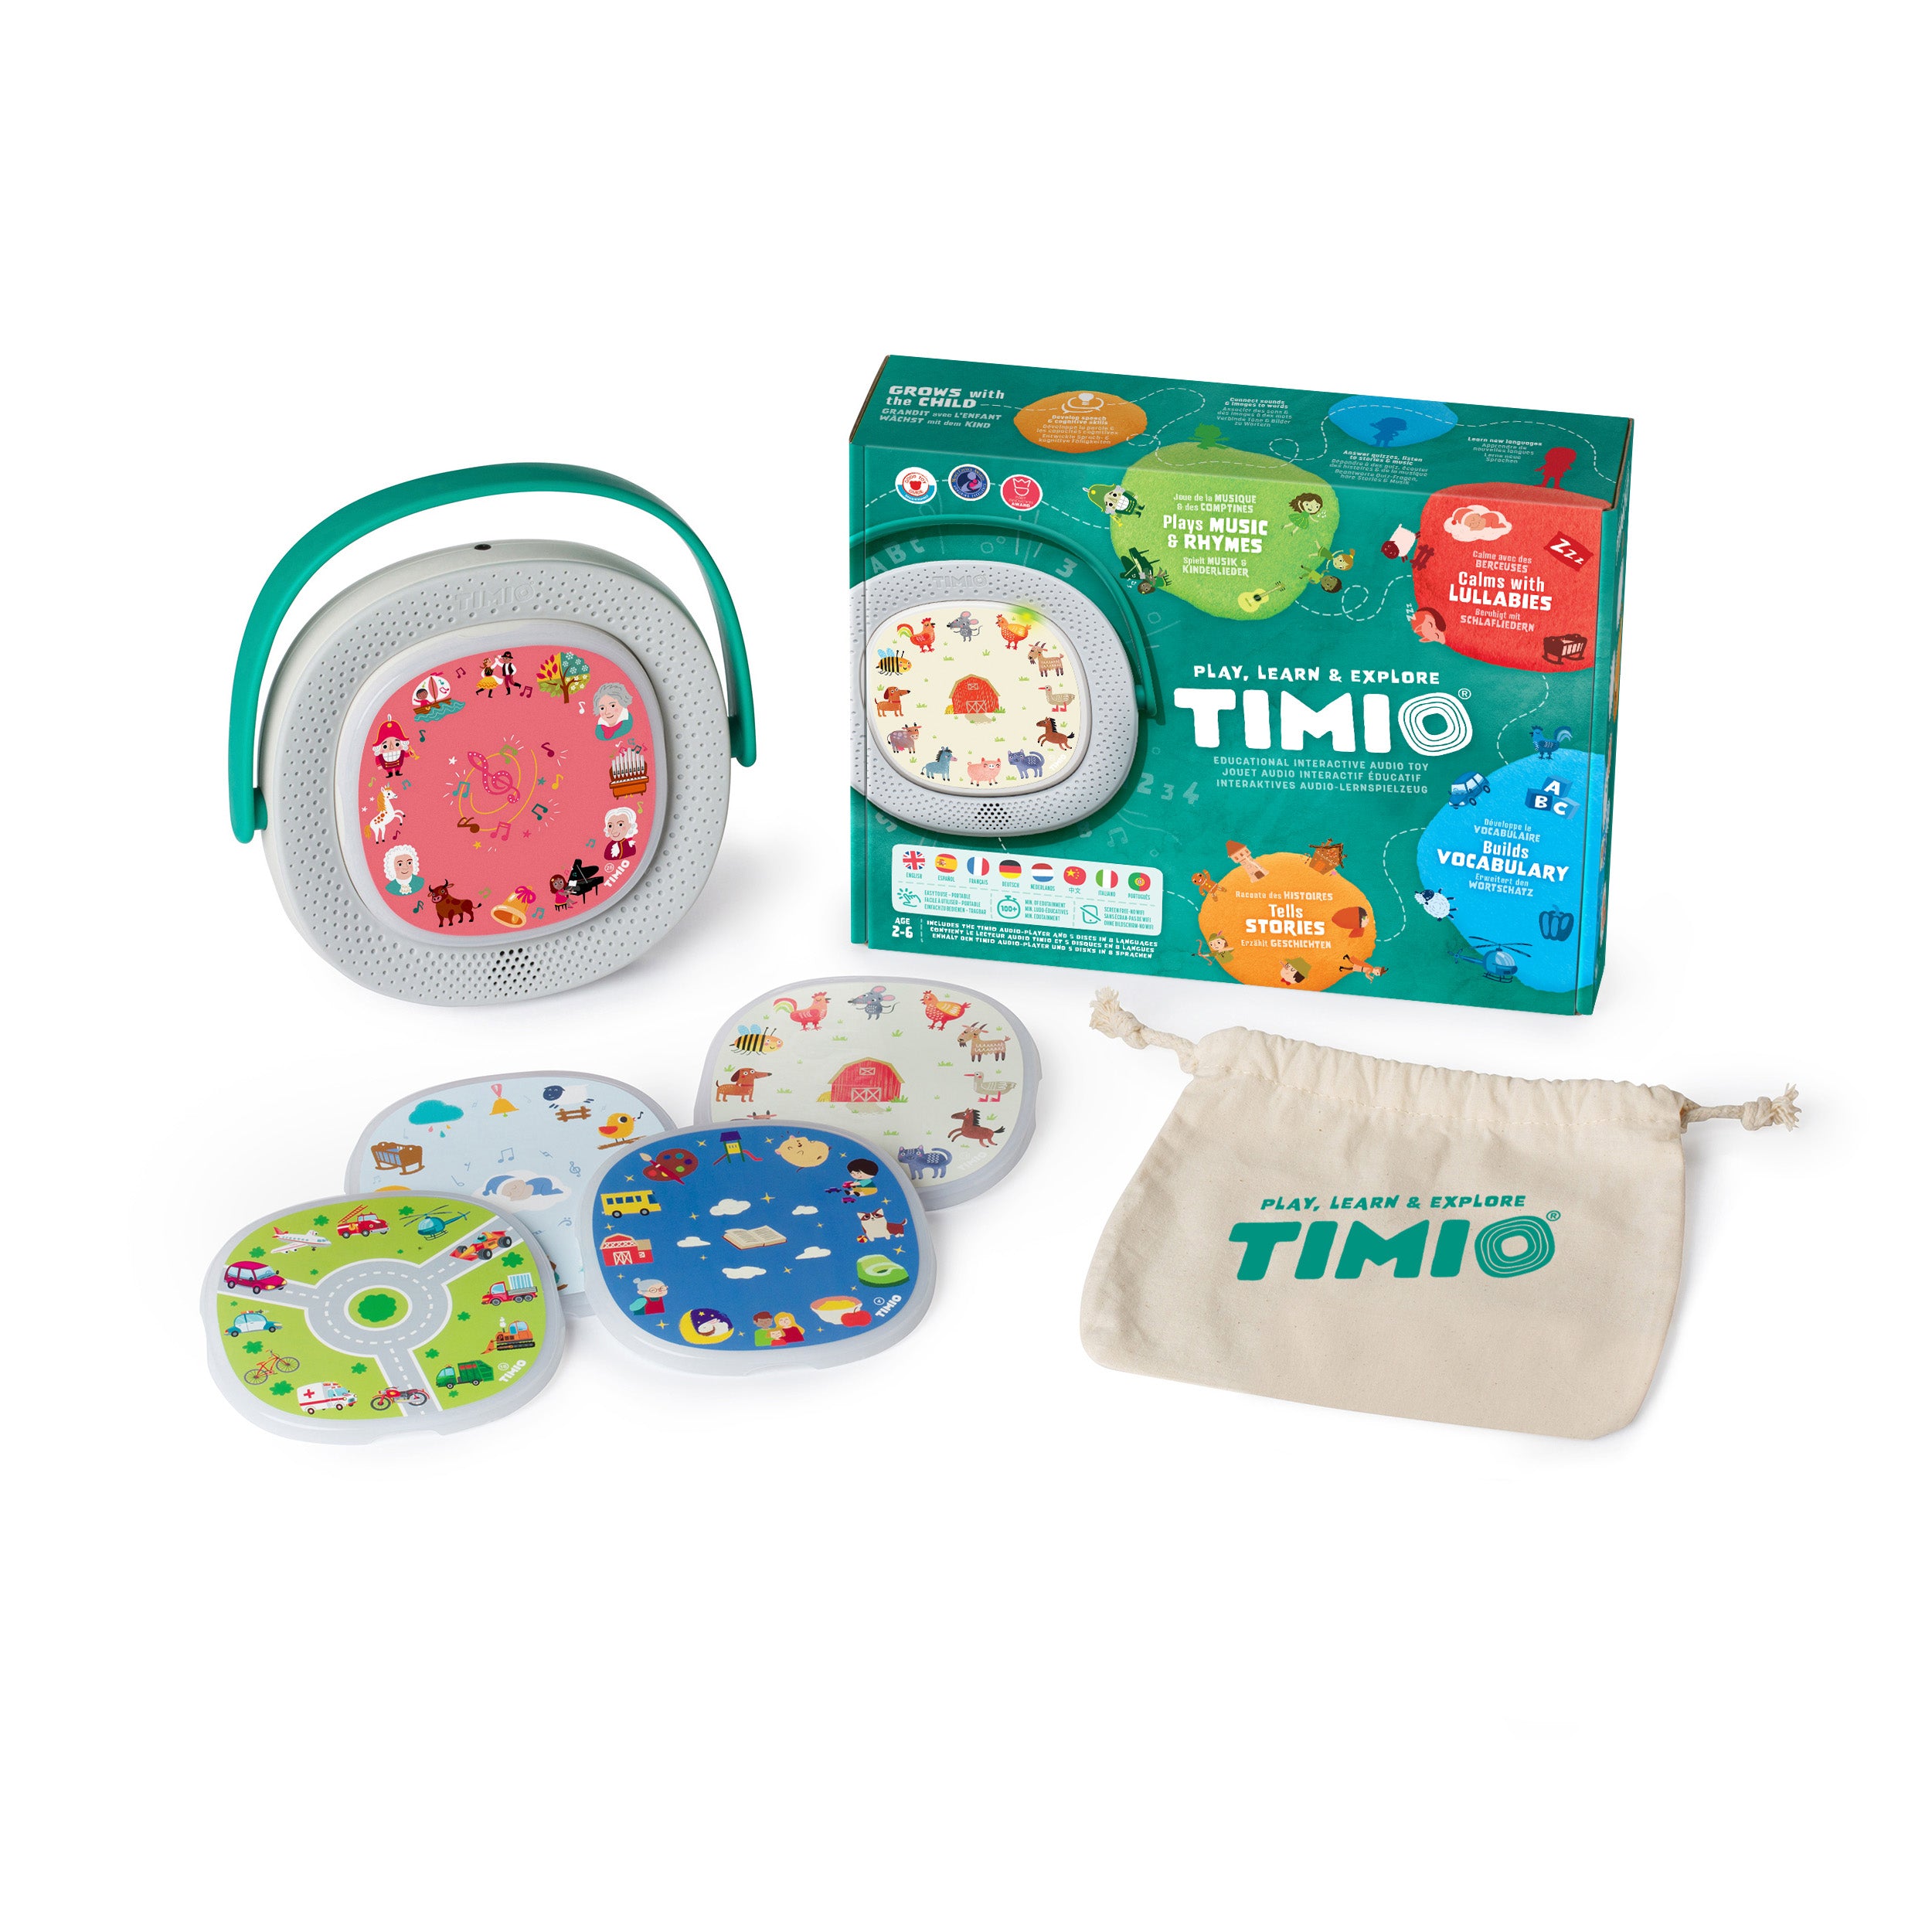 TIMIO Starter Kit